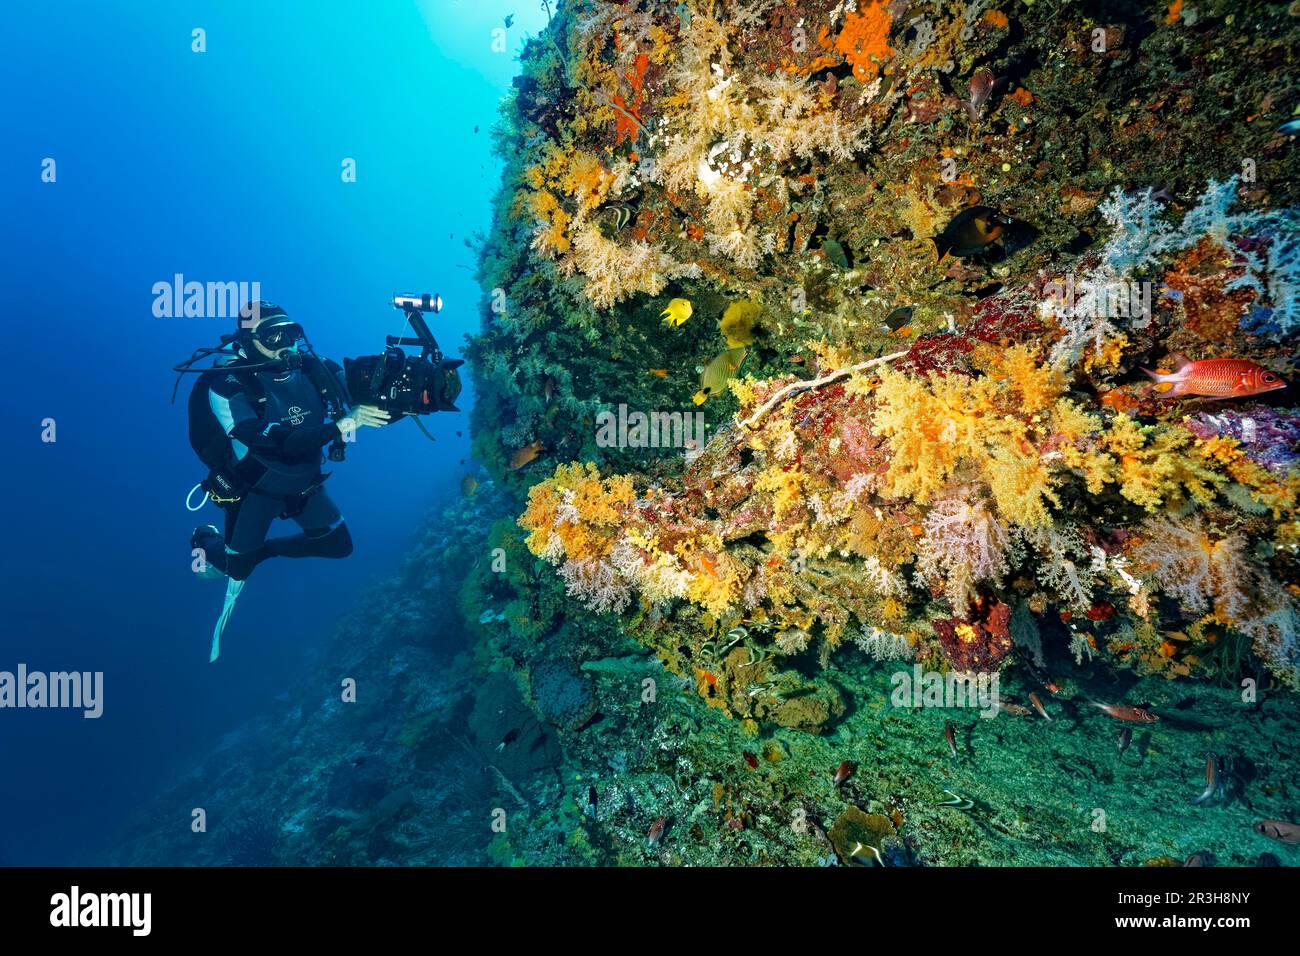 Cameraman filming on coral reef with professional underwater video camera type RED Dragon X 6K Digital Cinema Camera in Nauticam underwater housing Stock Photo